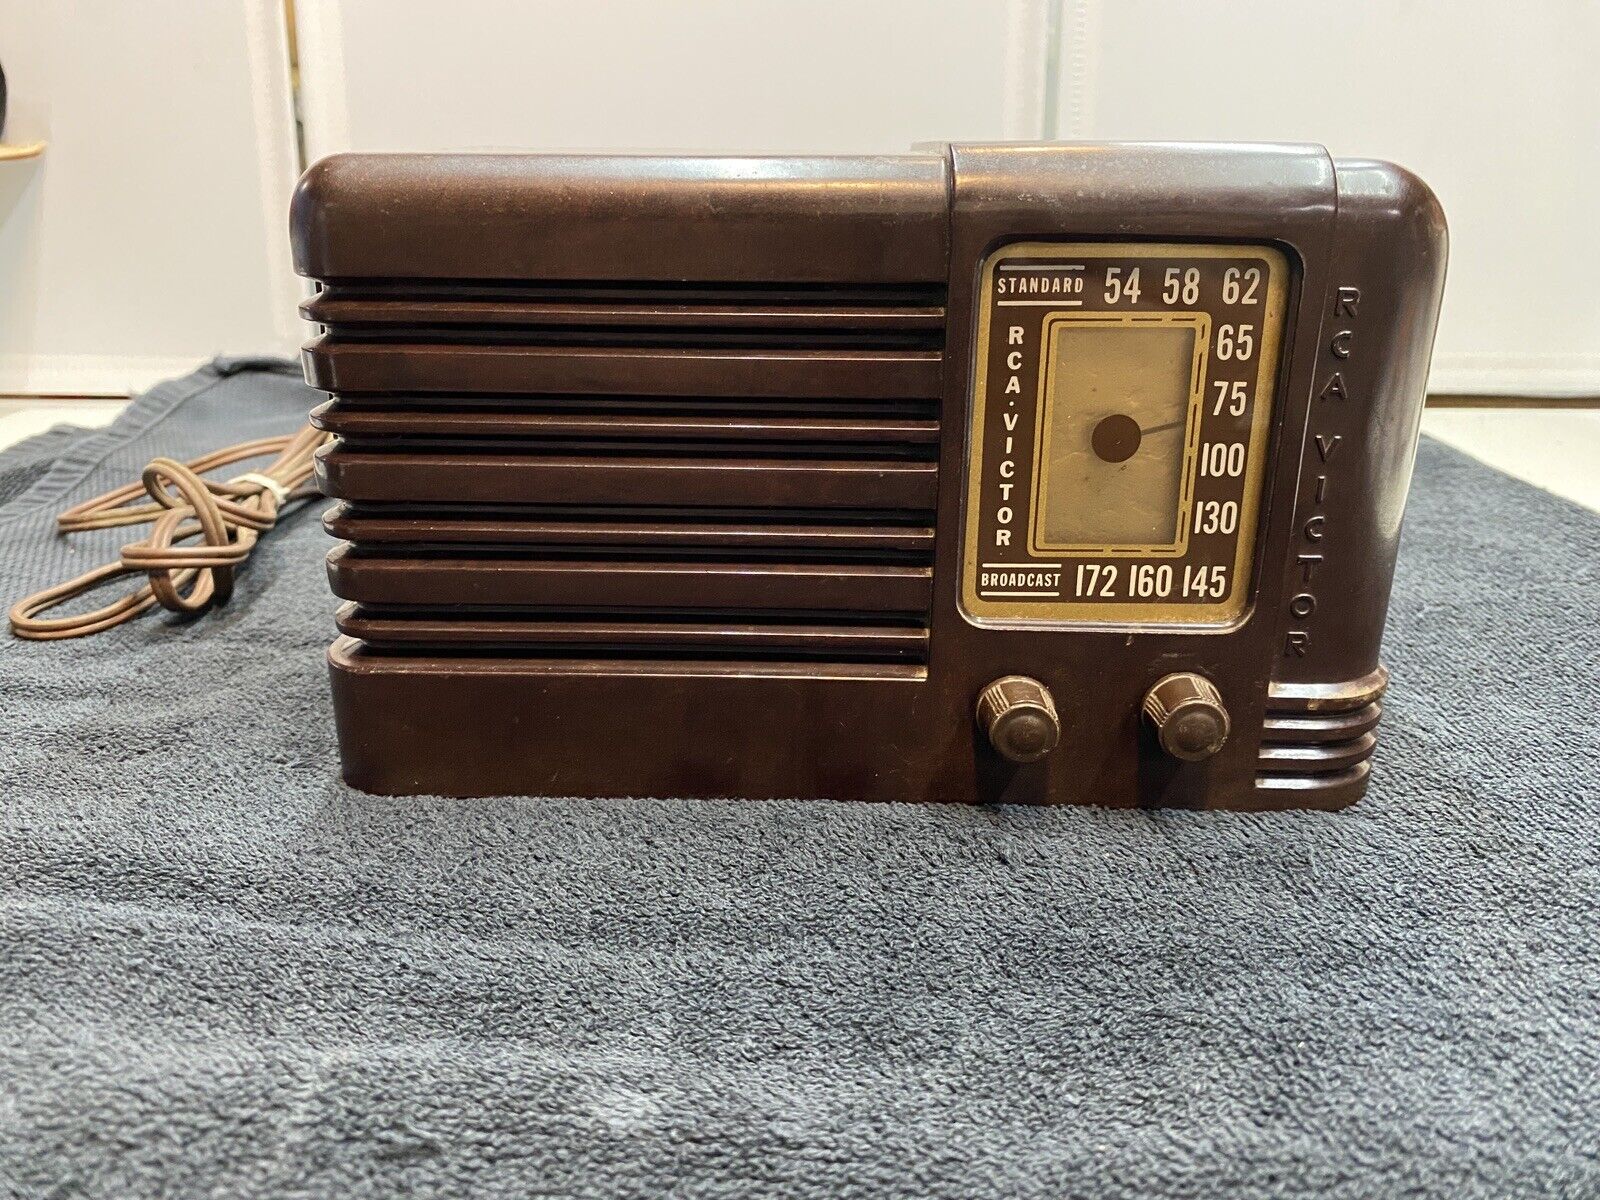 Vintage RCA Victor AM 45x18 radio — Small Brown Bakelite Great Shape See Photos